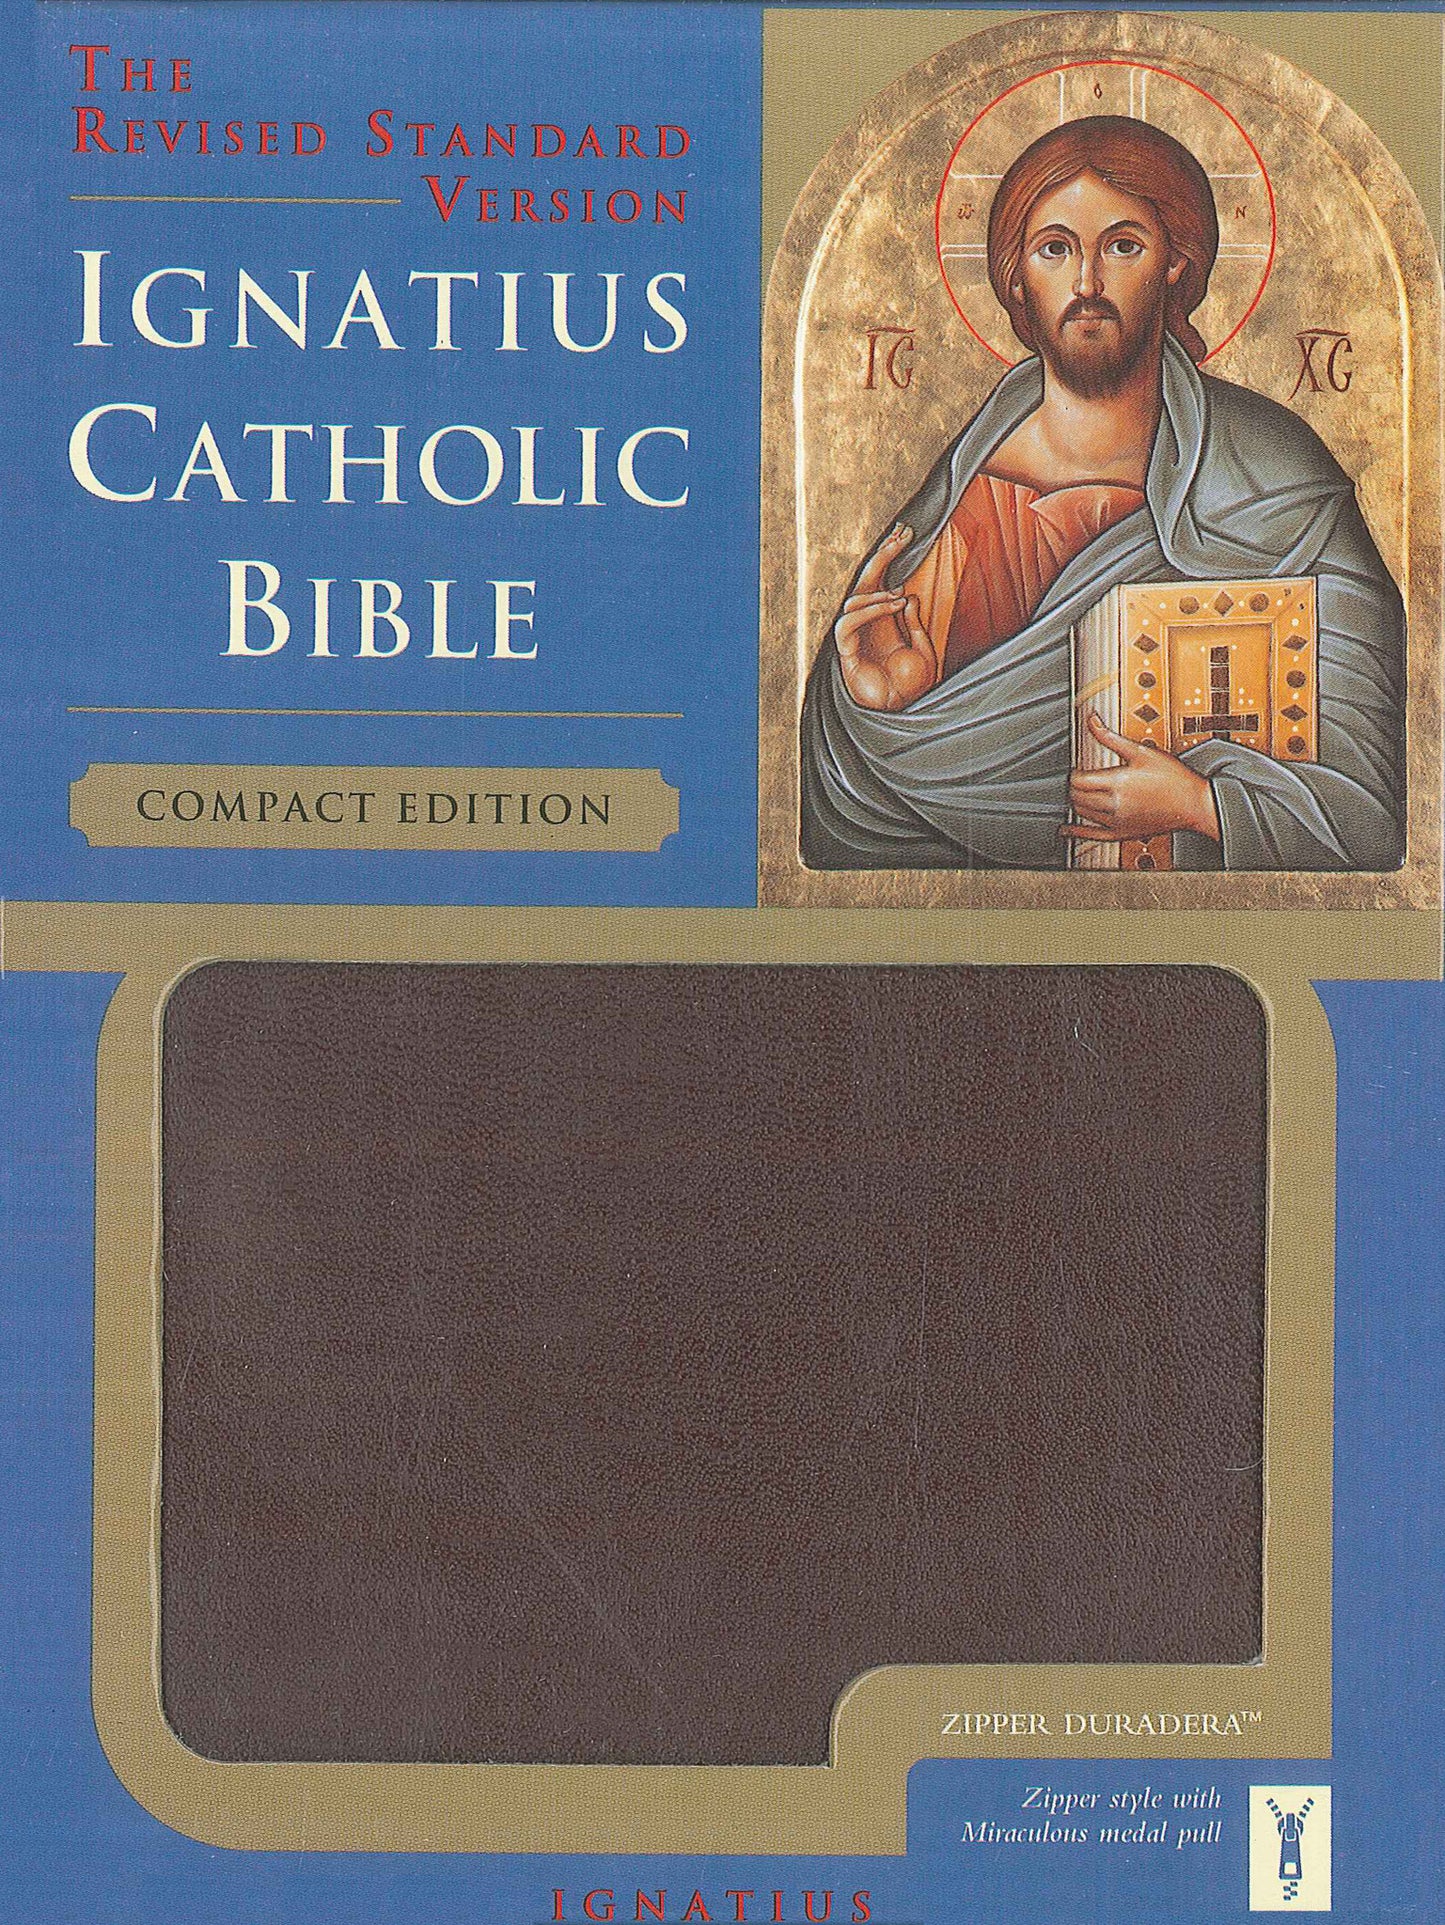 Ignatius Catholic Bible: Compact Edition